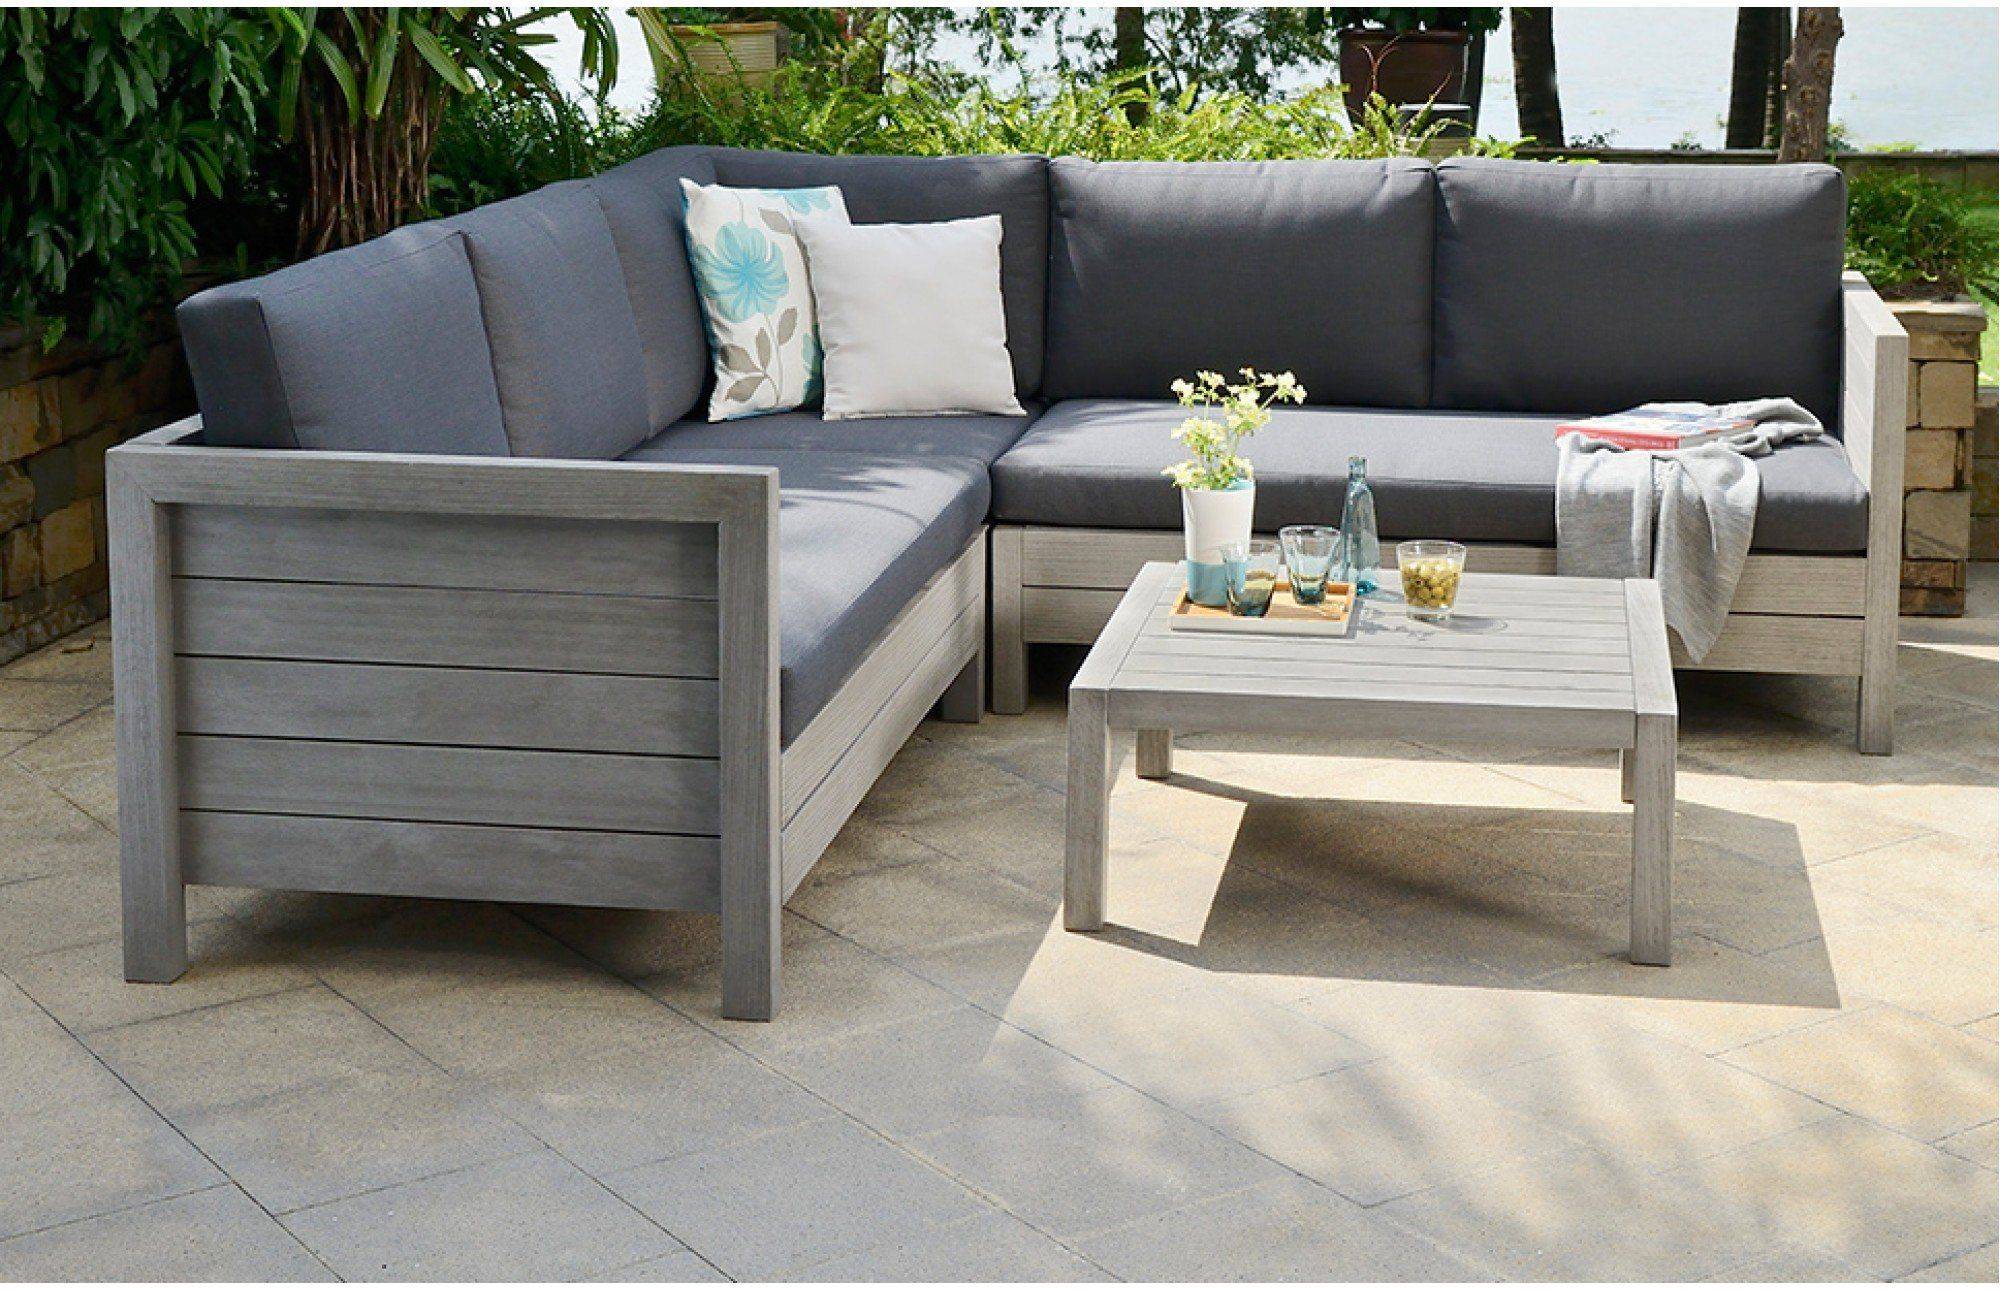 Diy Outdoor Furniture Patio And Garden Furniture Plans